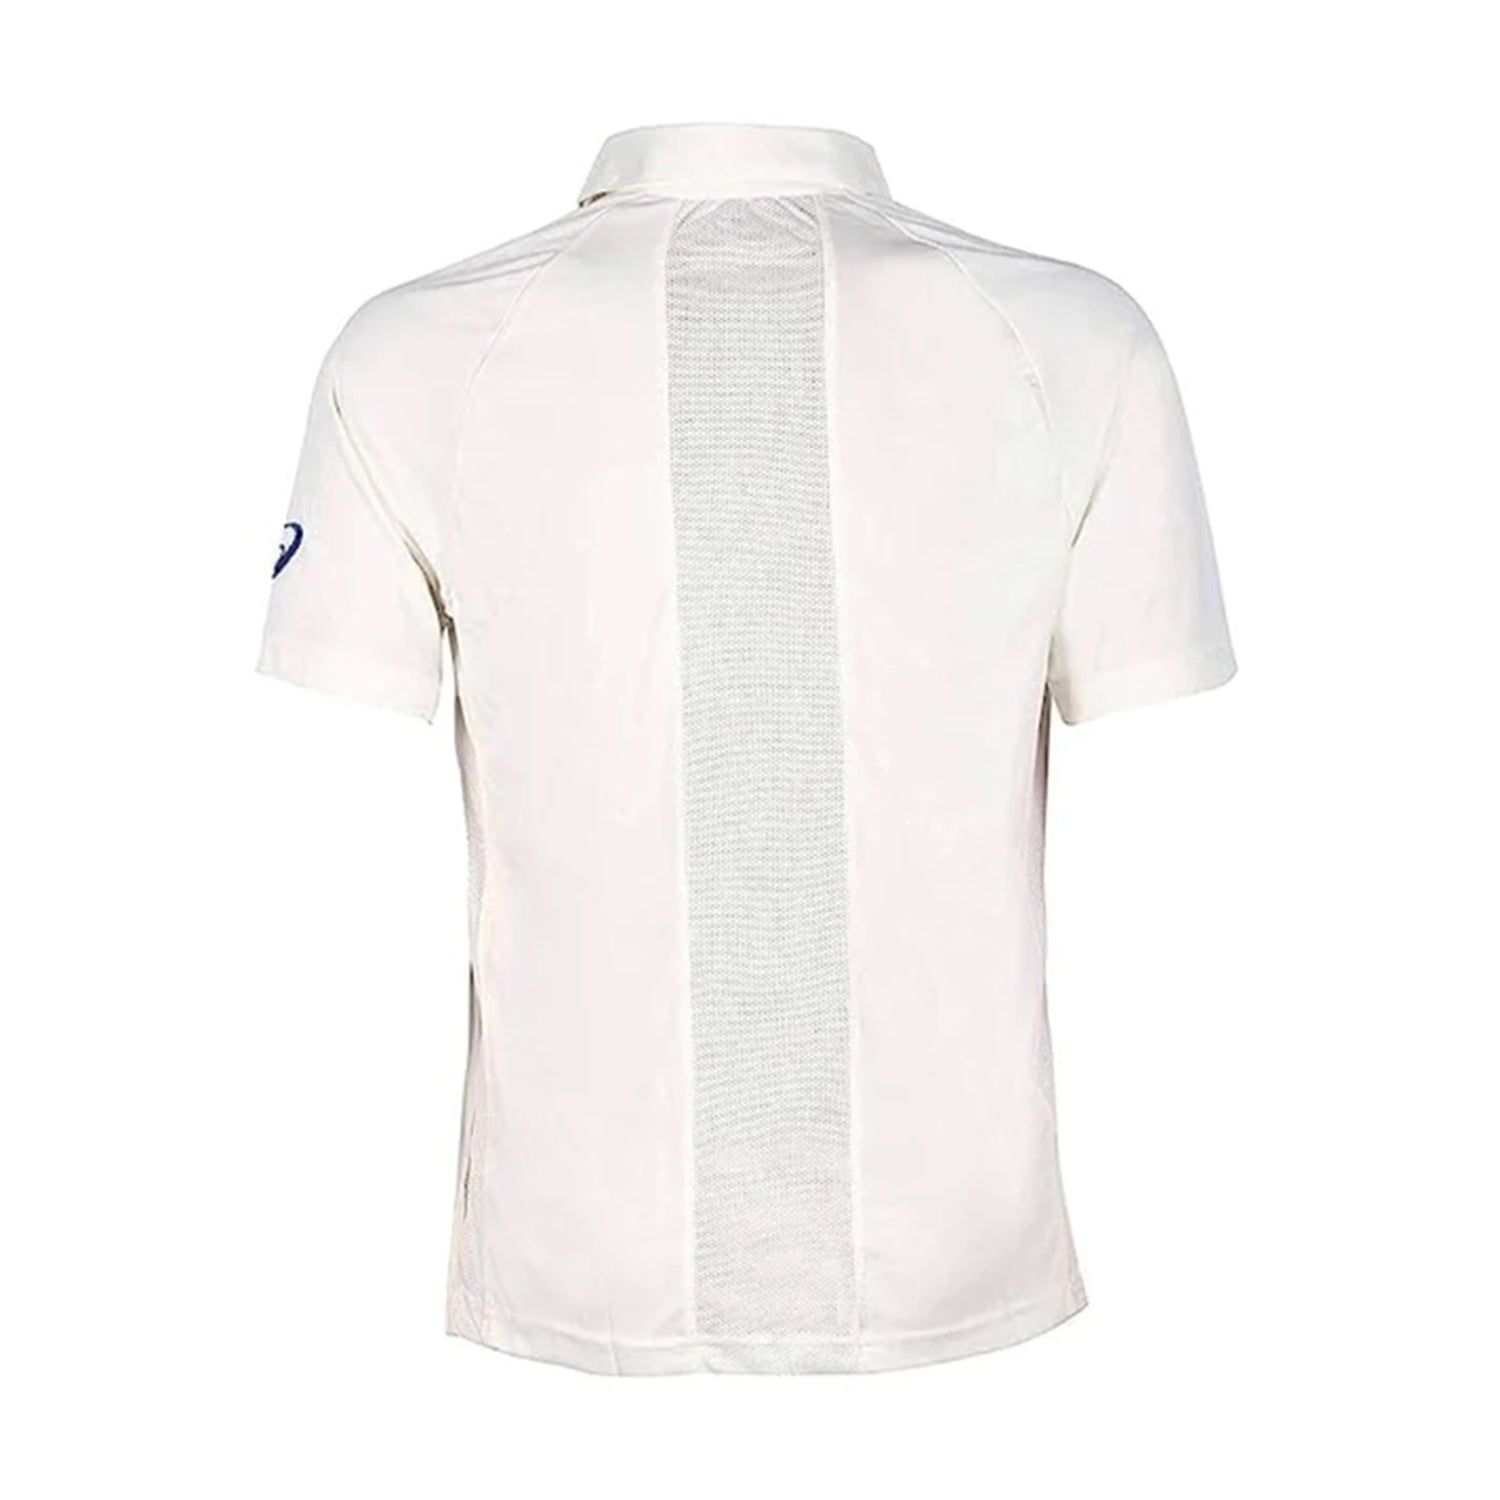 ASICS Cricket Polo 2 Men's T-Shirt , Cream - Best Price online Prokicksports.com